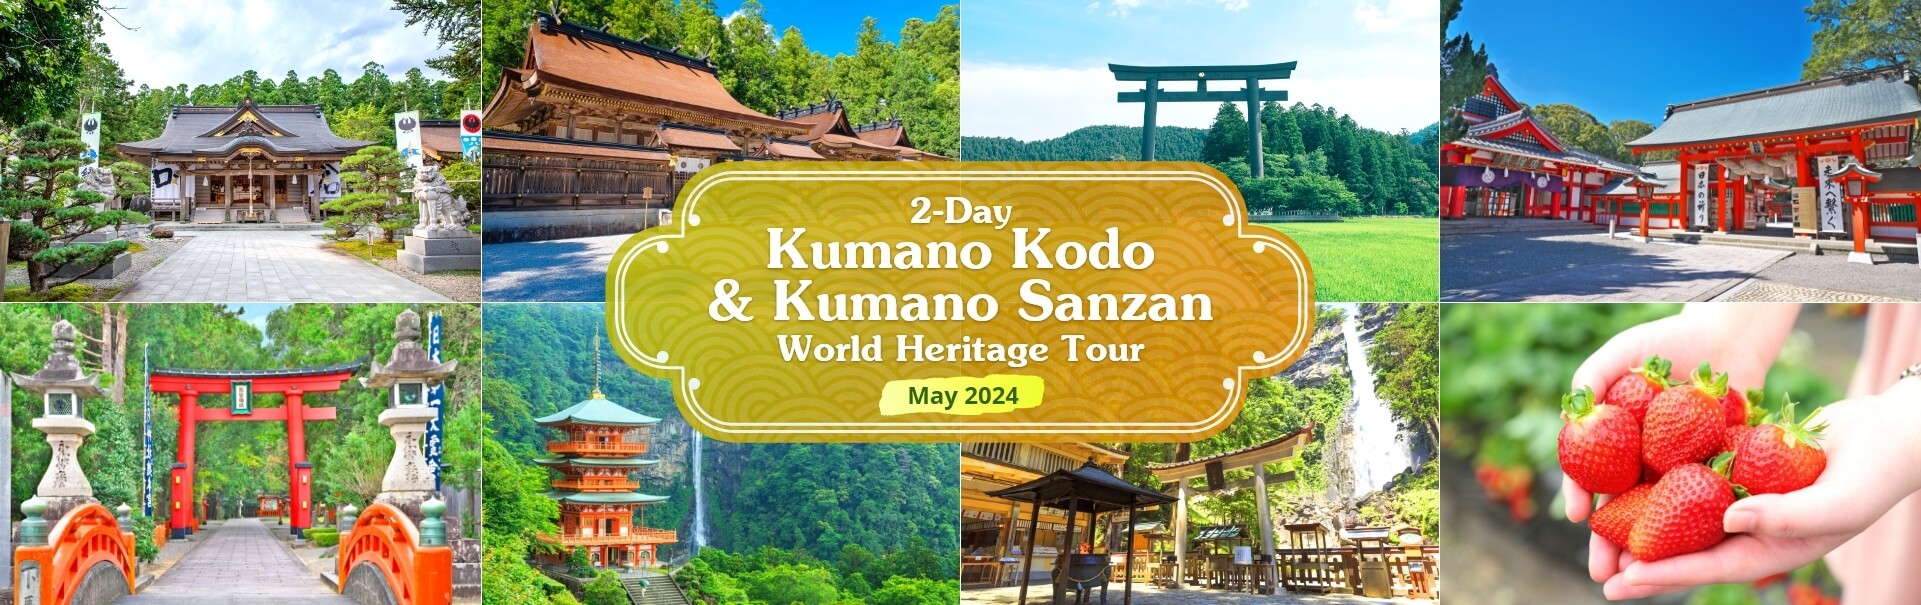 2-Day Kumano Kodo & Kumano Sanzan World Heritage Tour